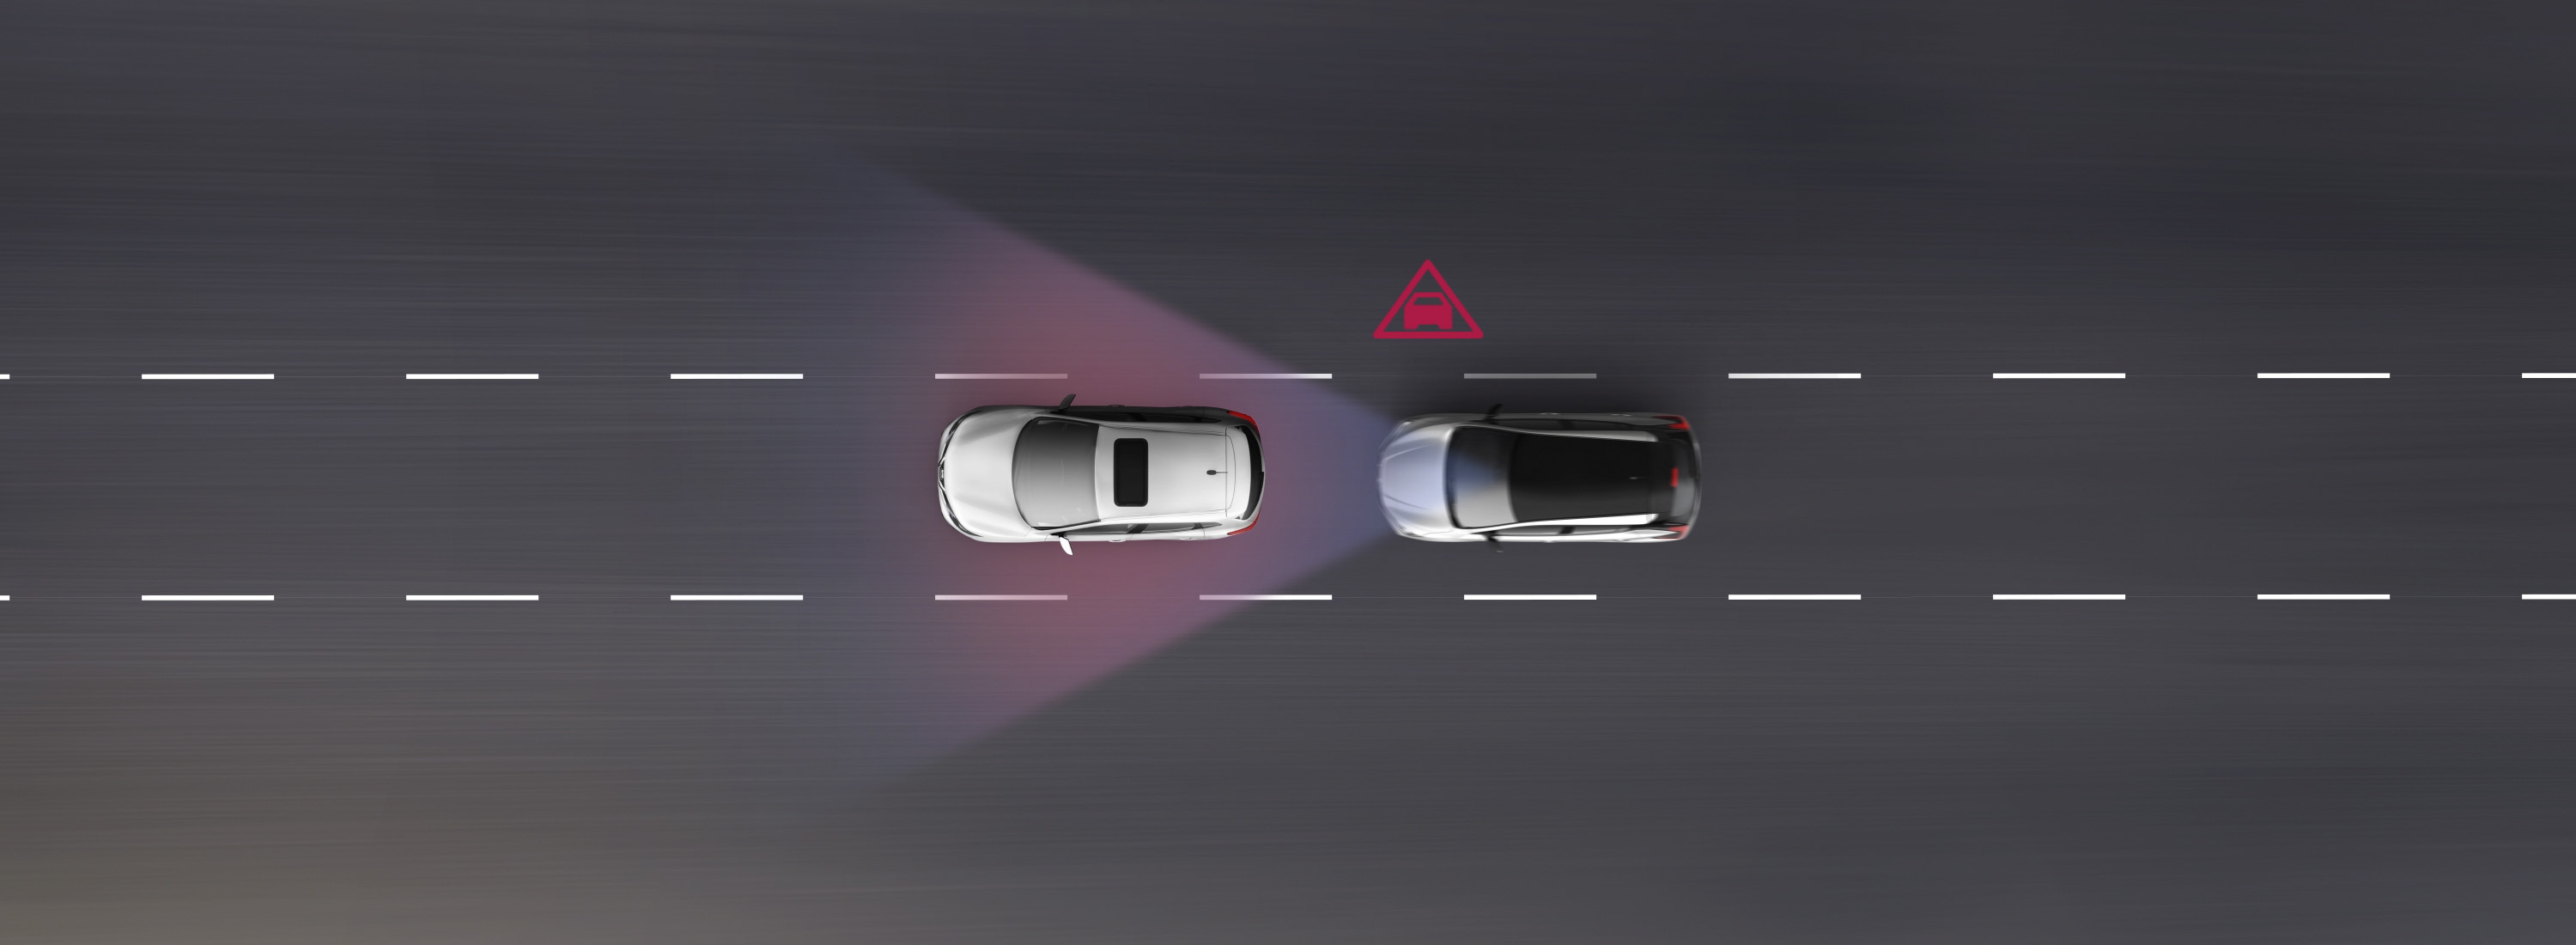 Nissan LEAF Intelligent Emergency Braking animation 